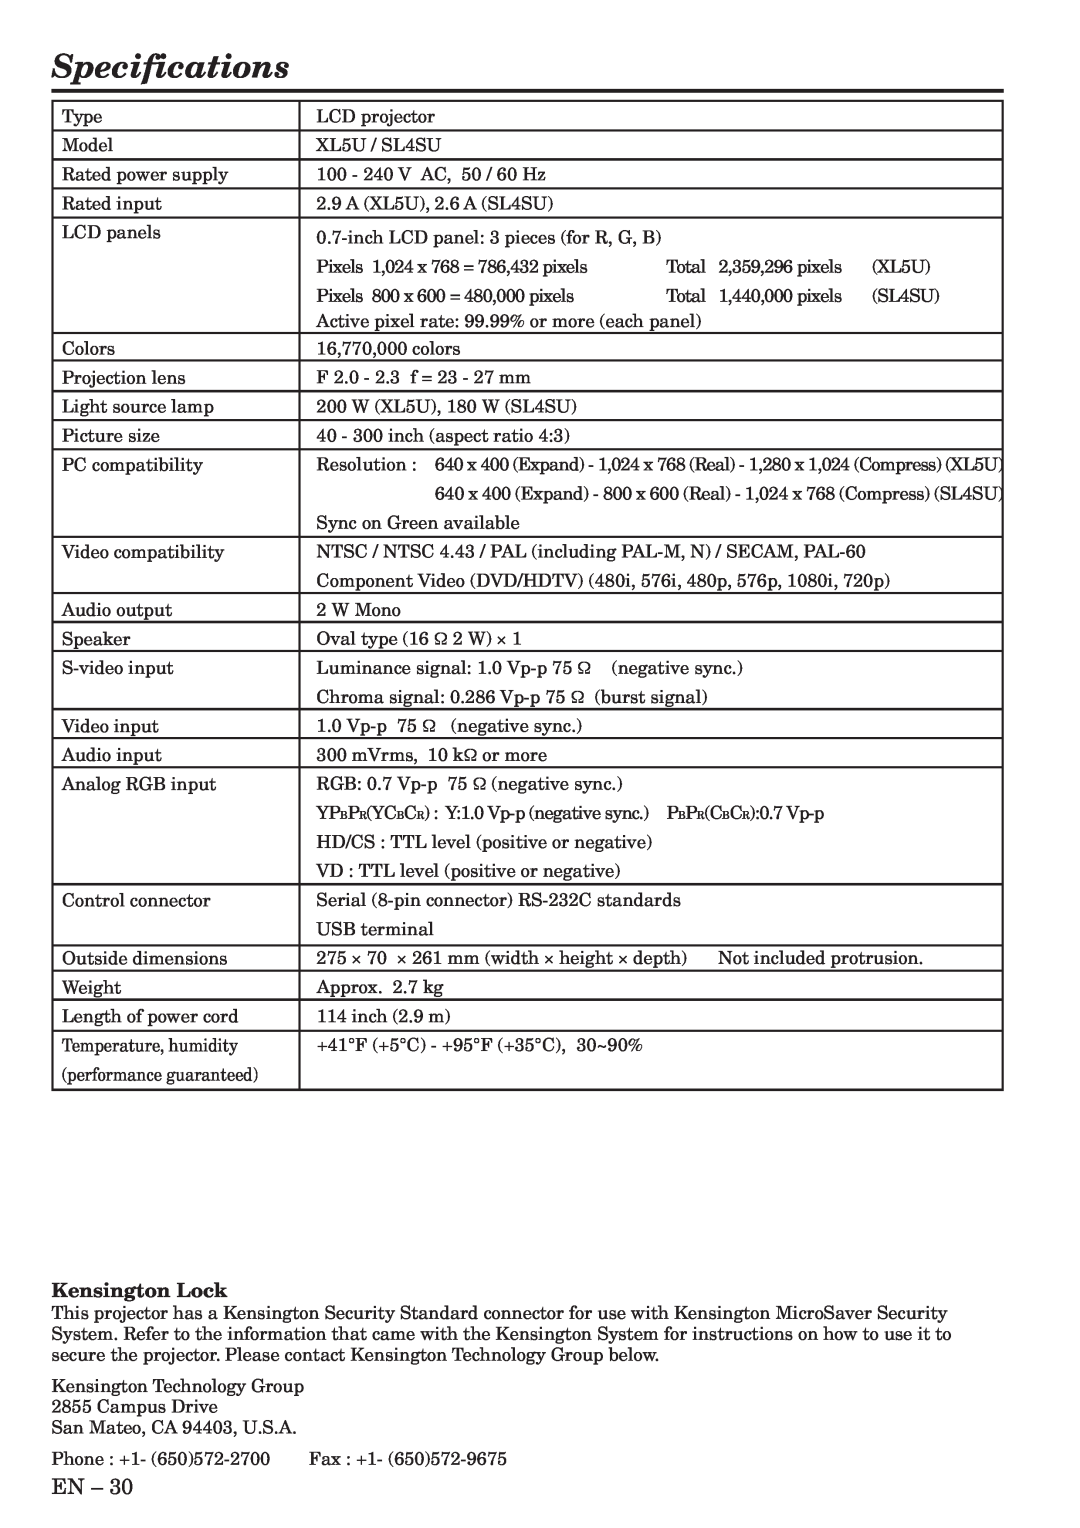 Mitsubishi Electronics XL5U user manual Specifications, Kensington Lock 